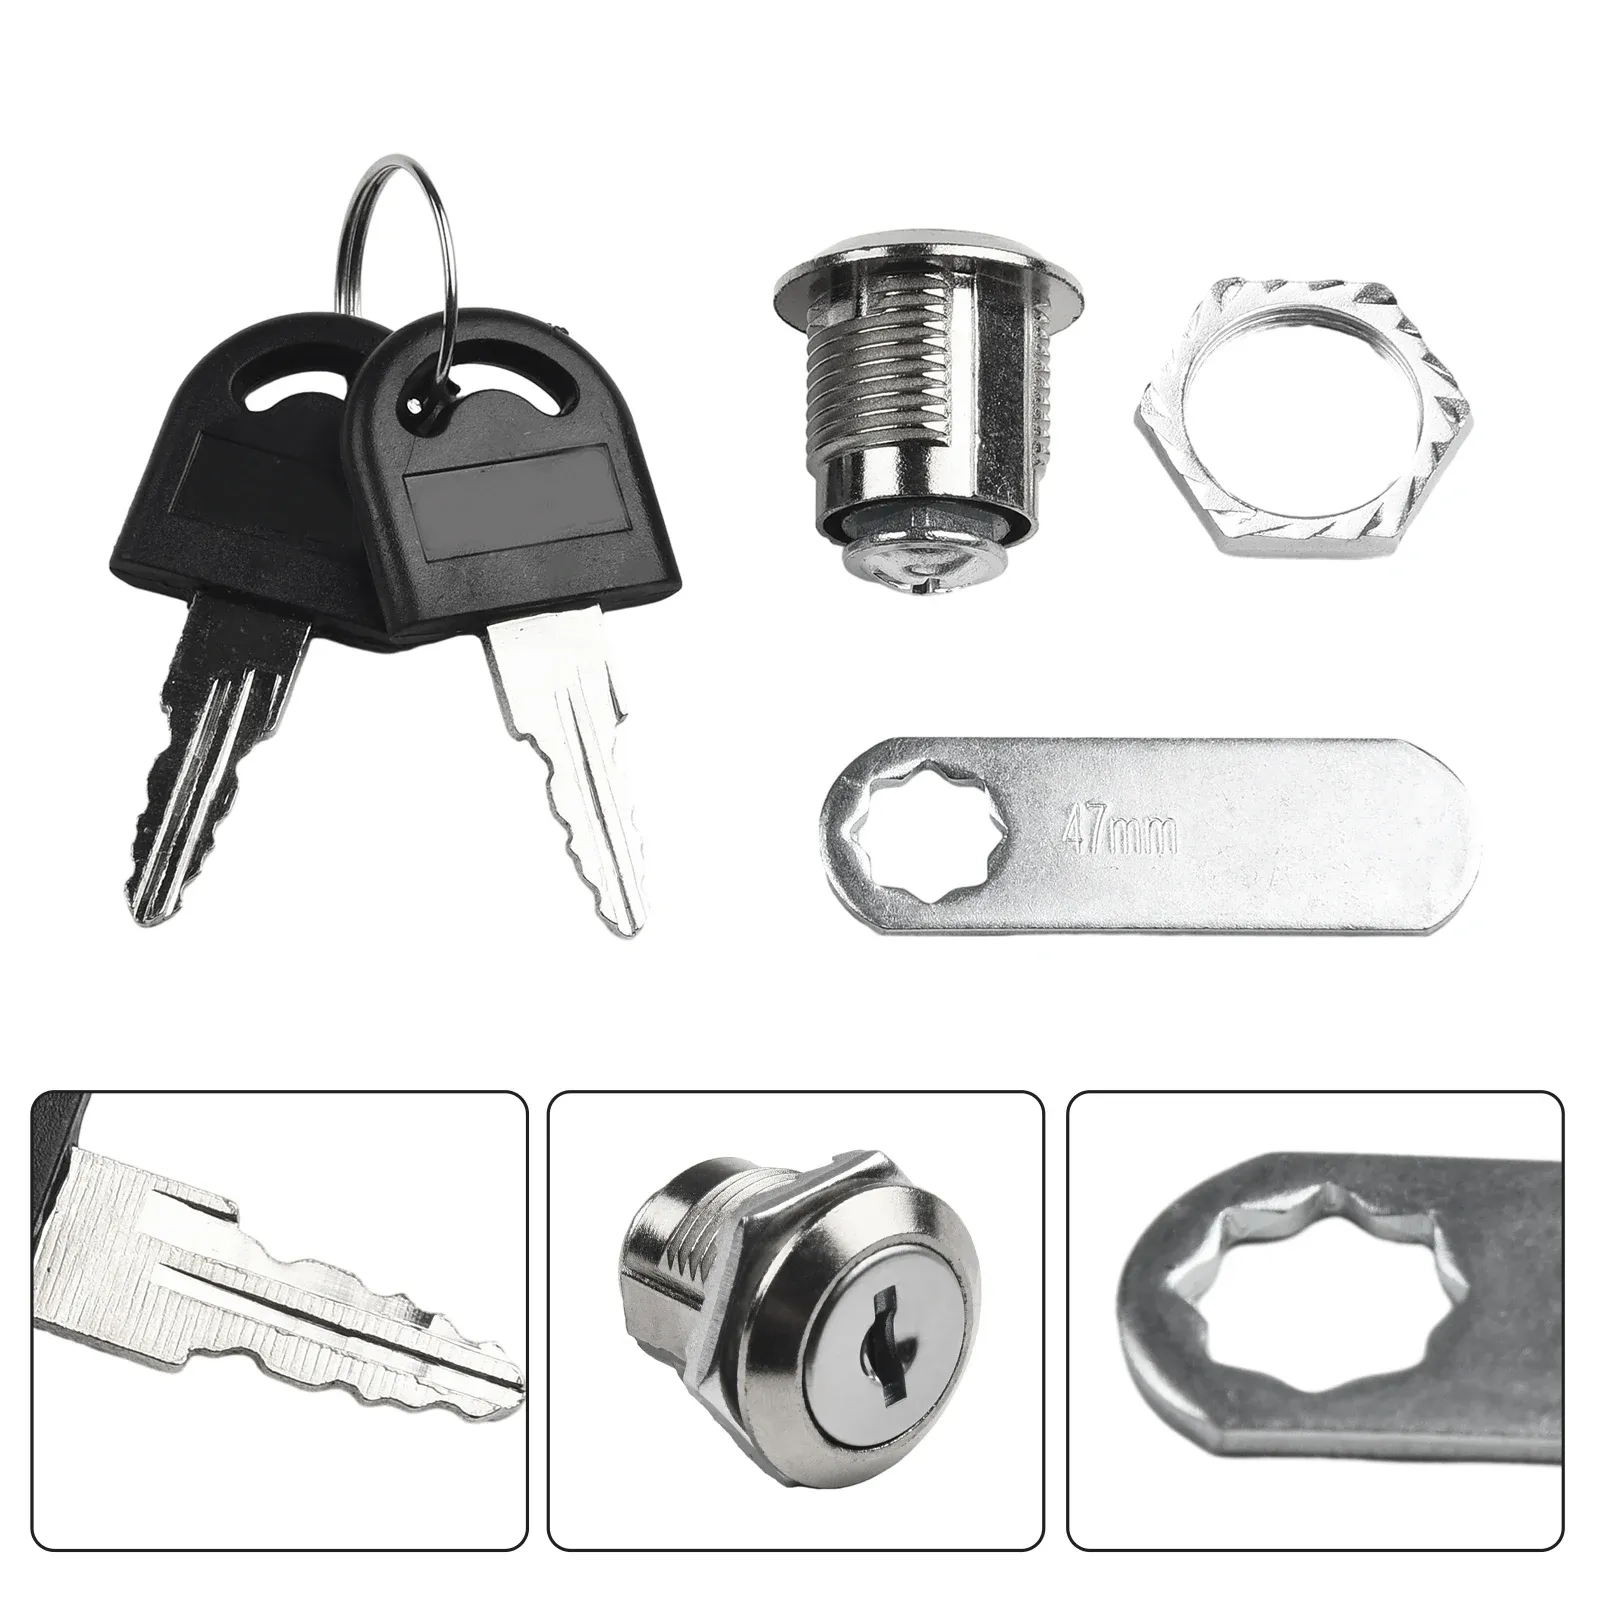 16/20/25/30mm Cam Lock Door Cabinet Mailbox Security Lock Drawer Cupboard Locker With 2 Keys Furniture Hardware